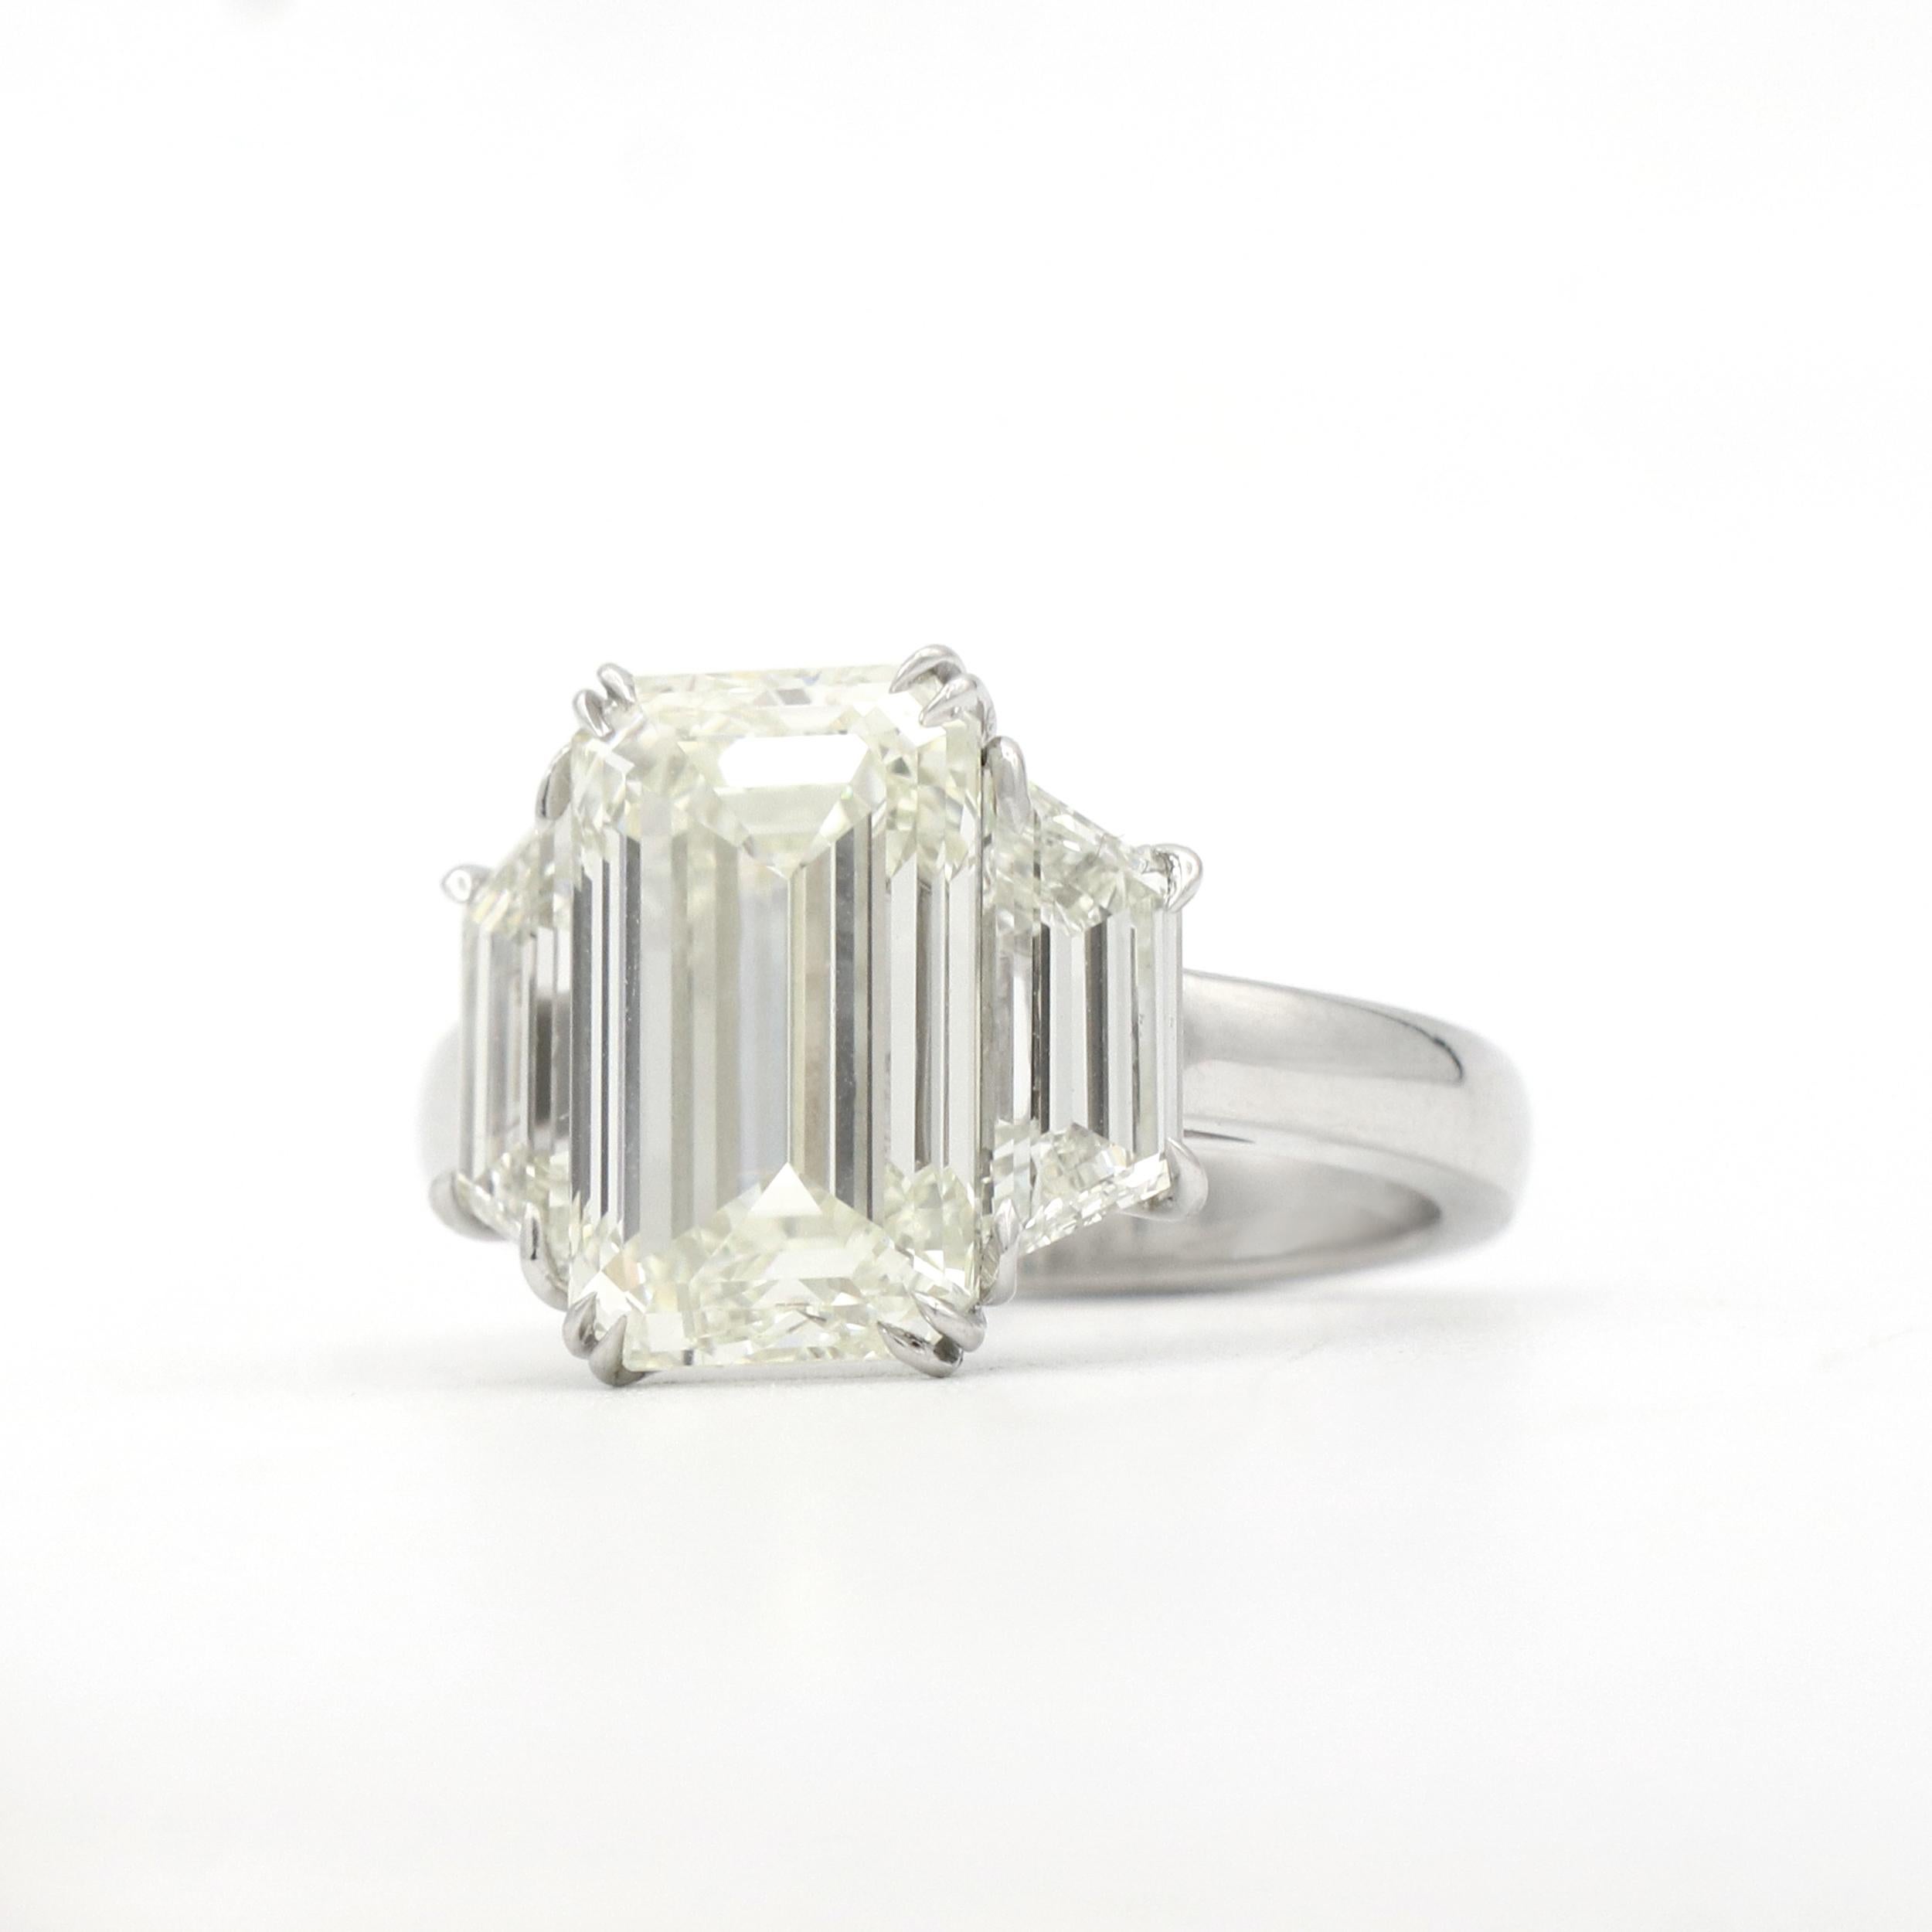 5 carat emerald diamond ring